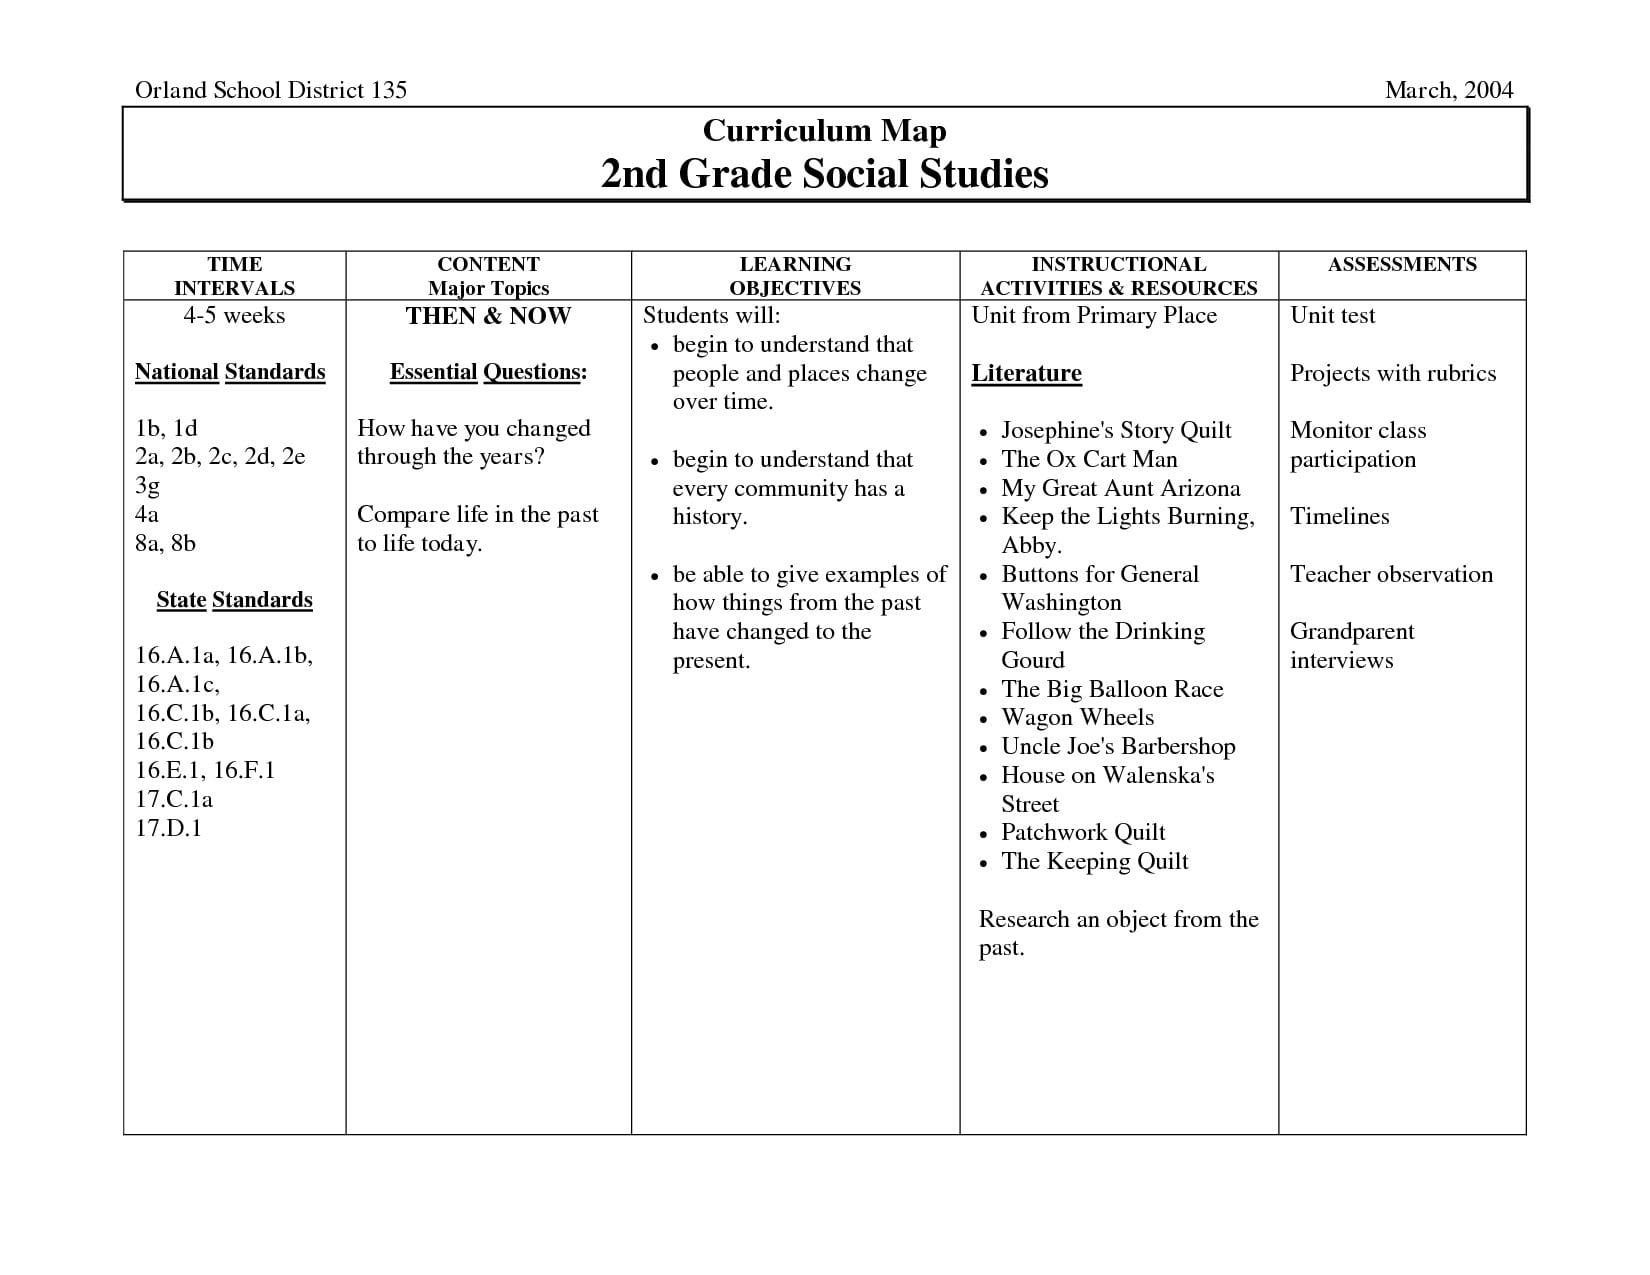 2nd-grade-social-studies-worksheets-db-excel